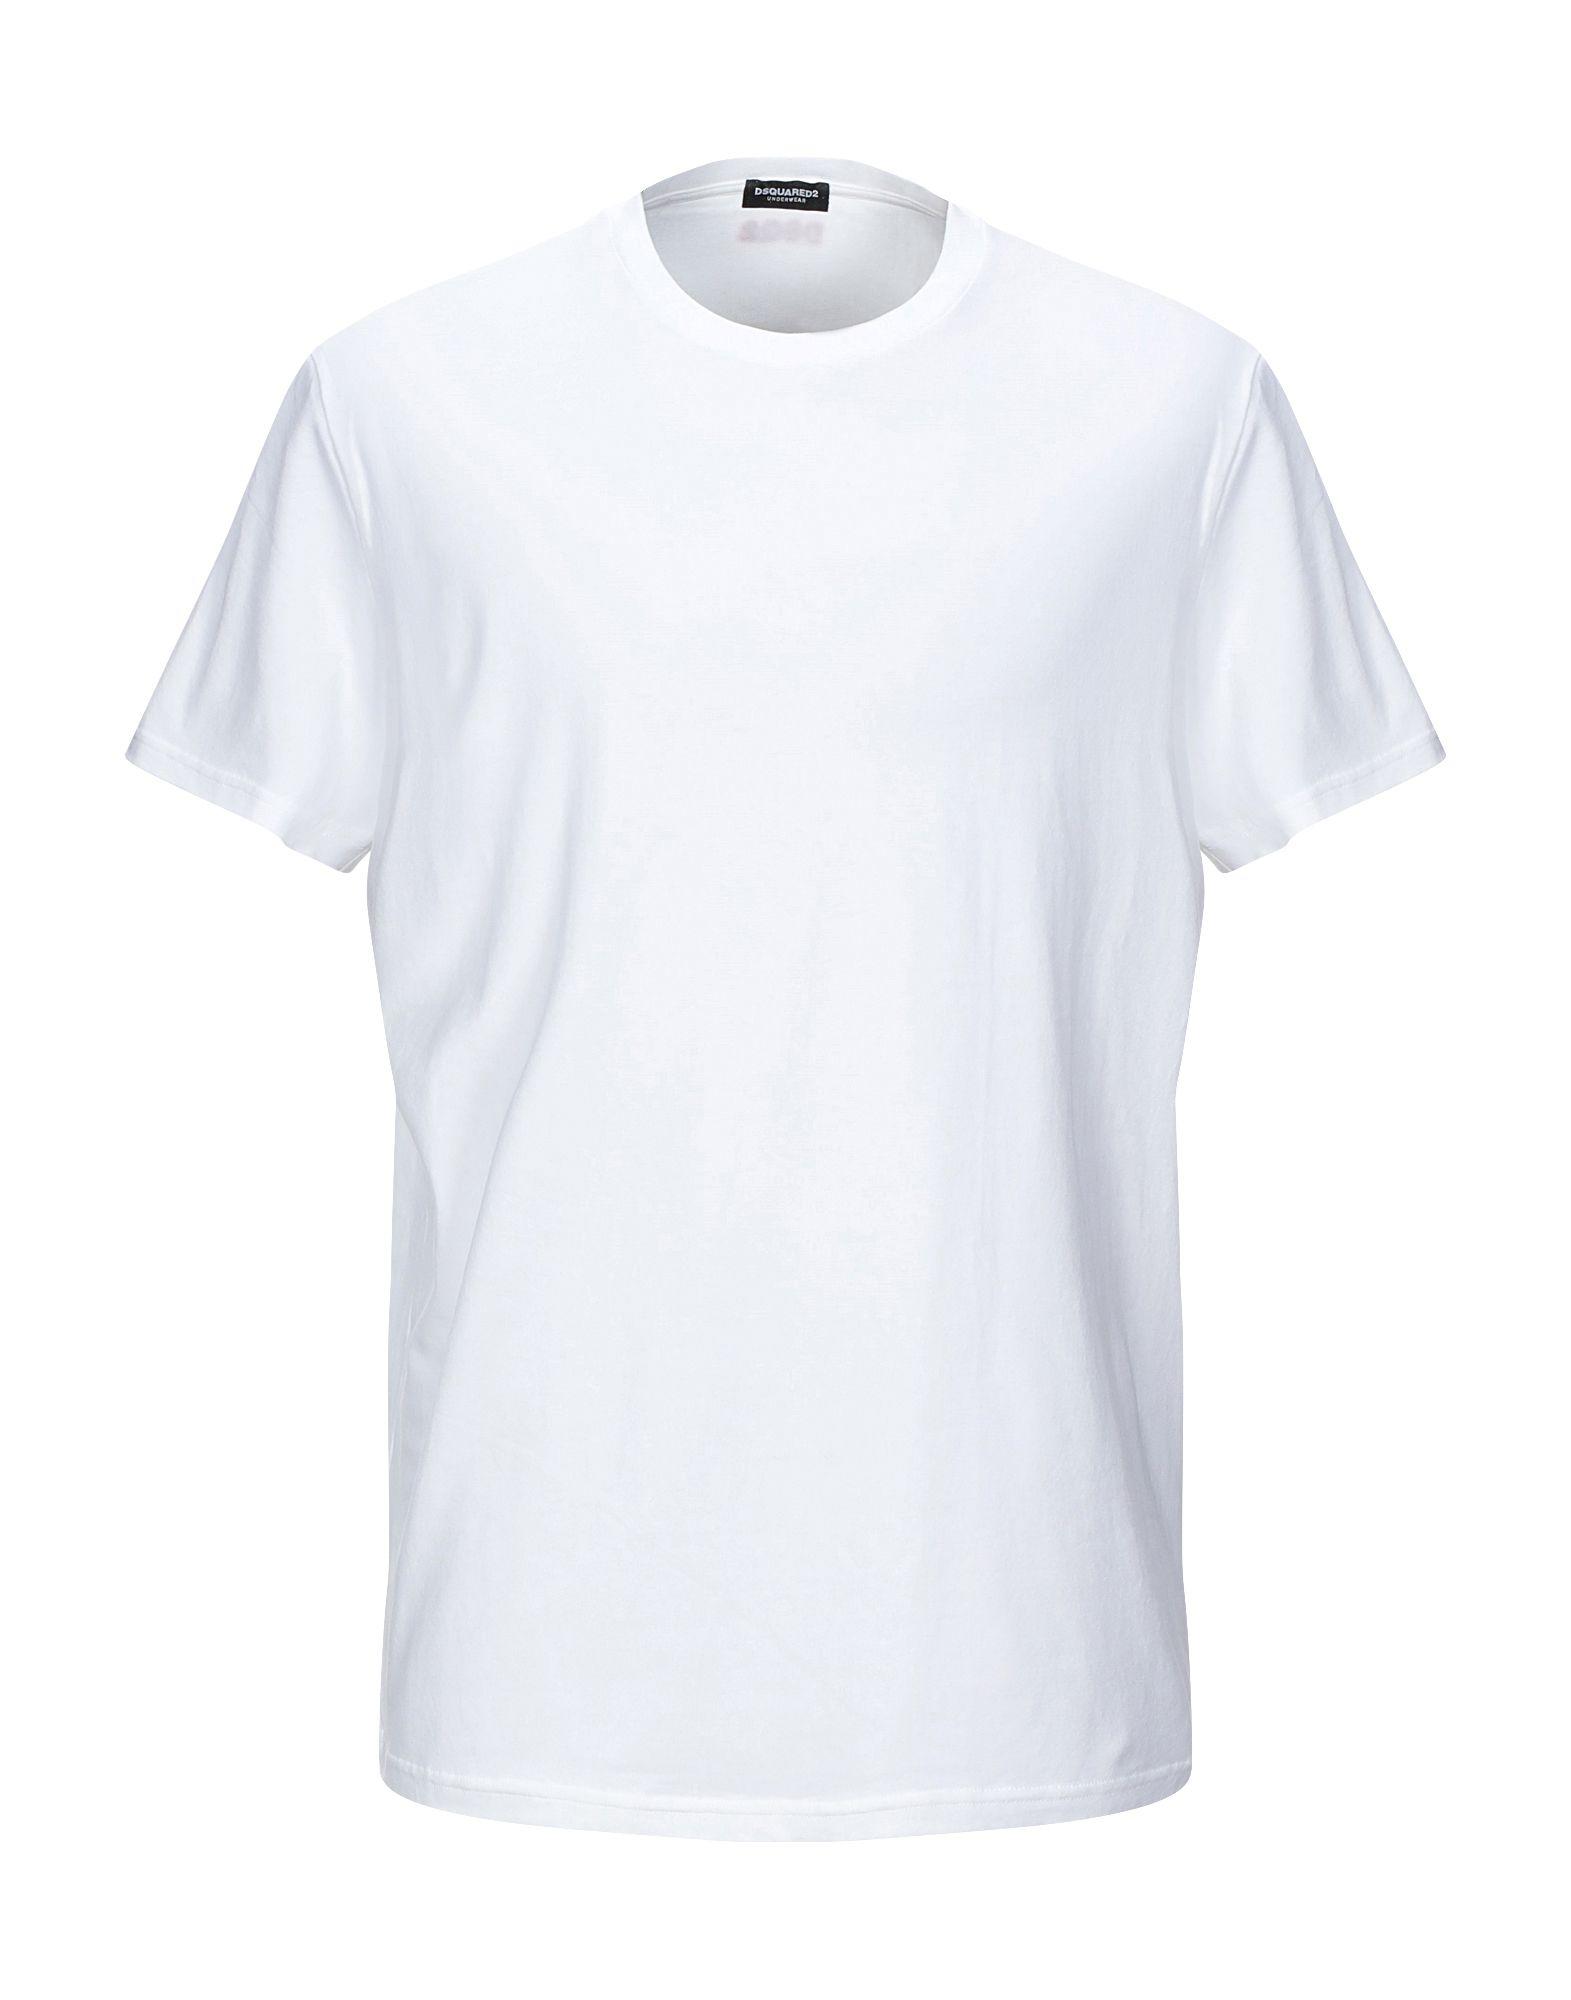 DSquared² Undershirt in White for Men - Lyst